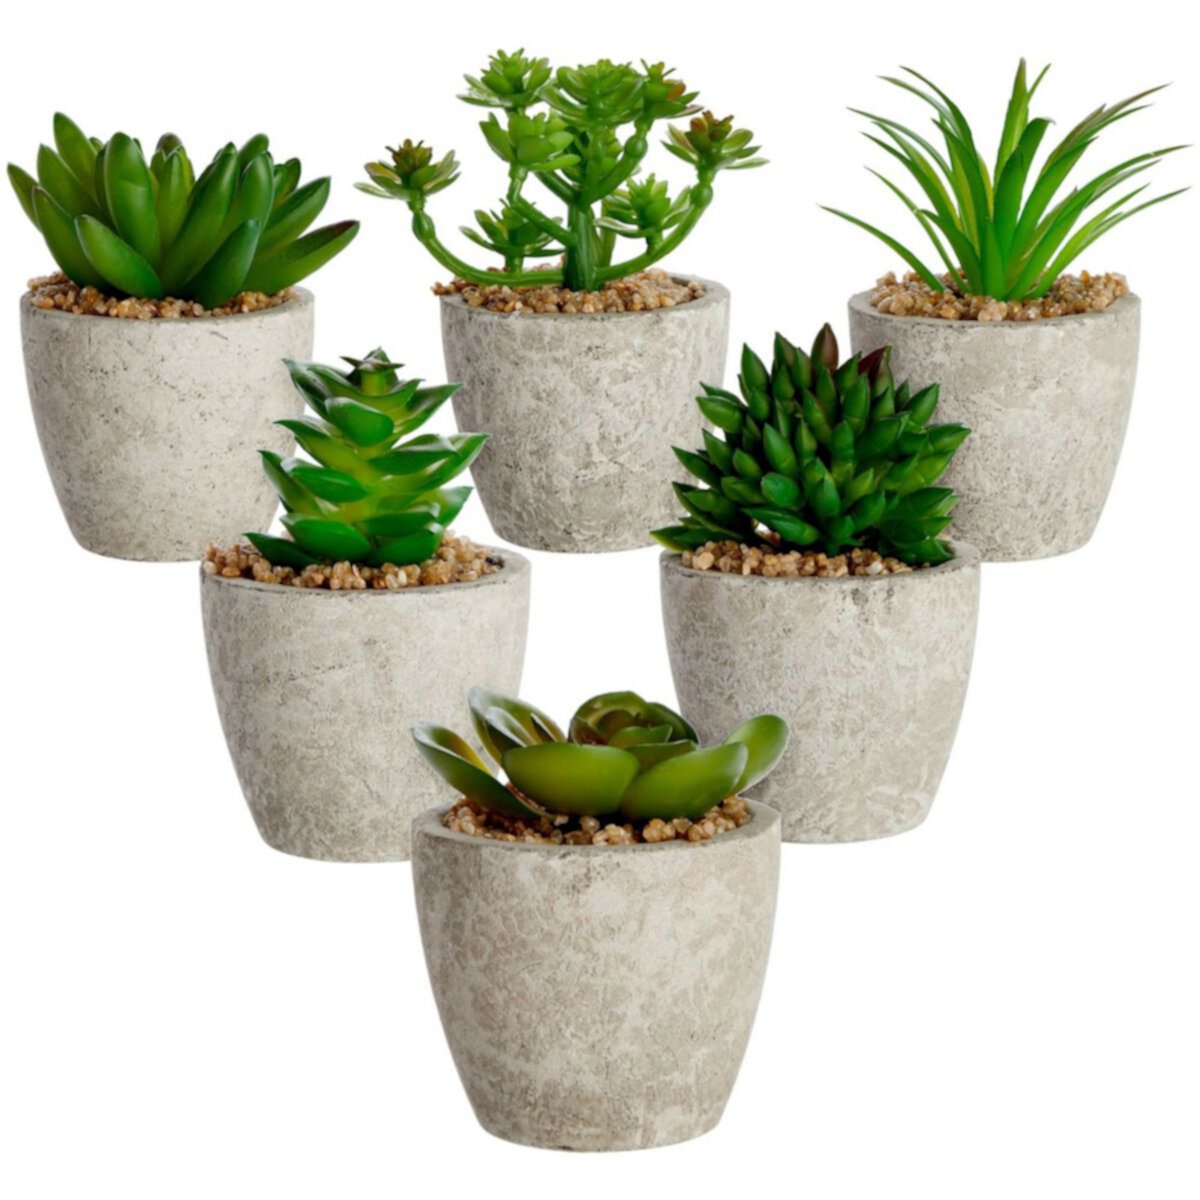 Juvale Artificial Succulents 6 Pack - Cactus Plants with Gray Pots - 4 inch Juvale